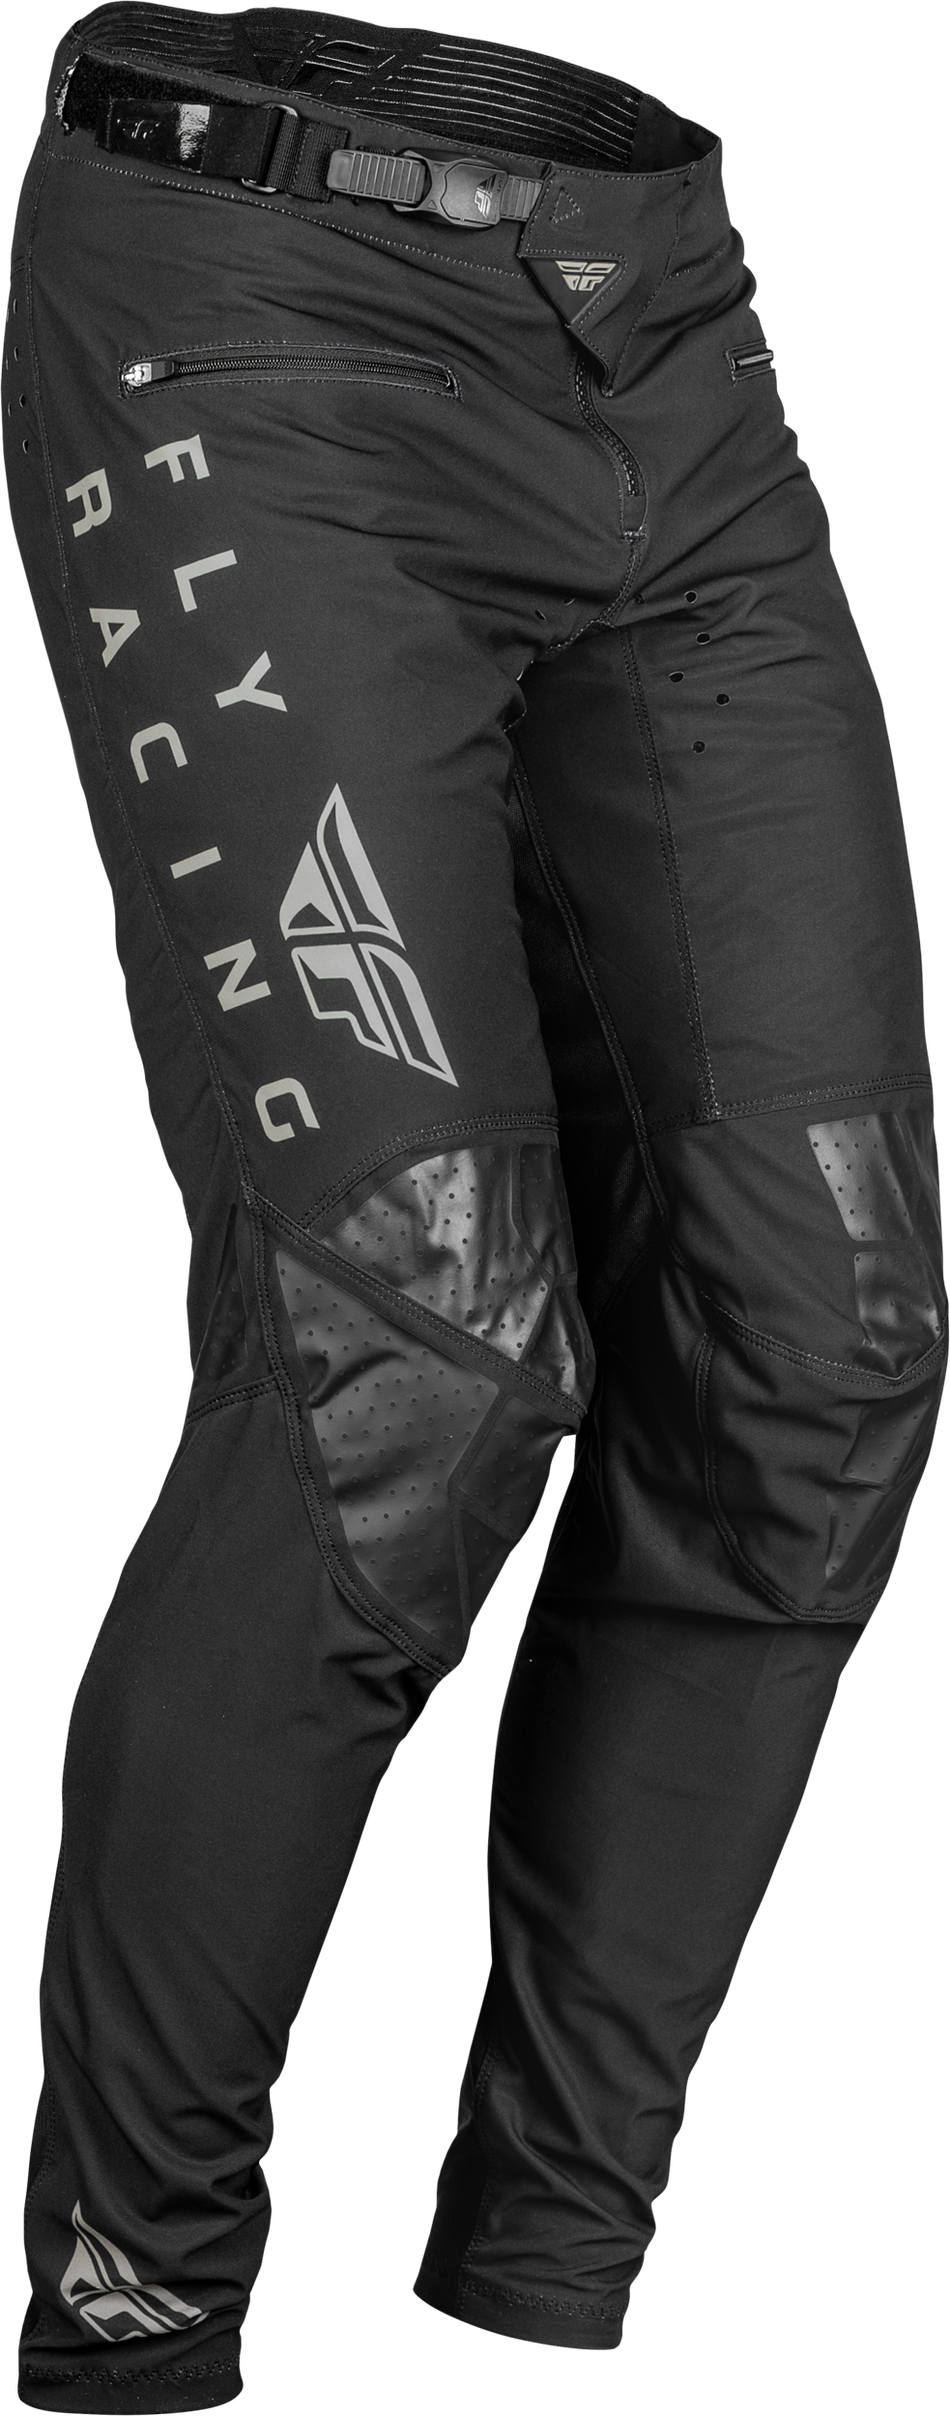 FLY RACING Radium Bicycle Pants Black/Grey Sz 40 376-04040